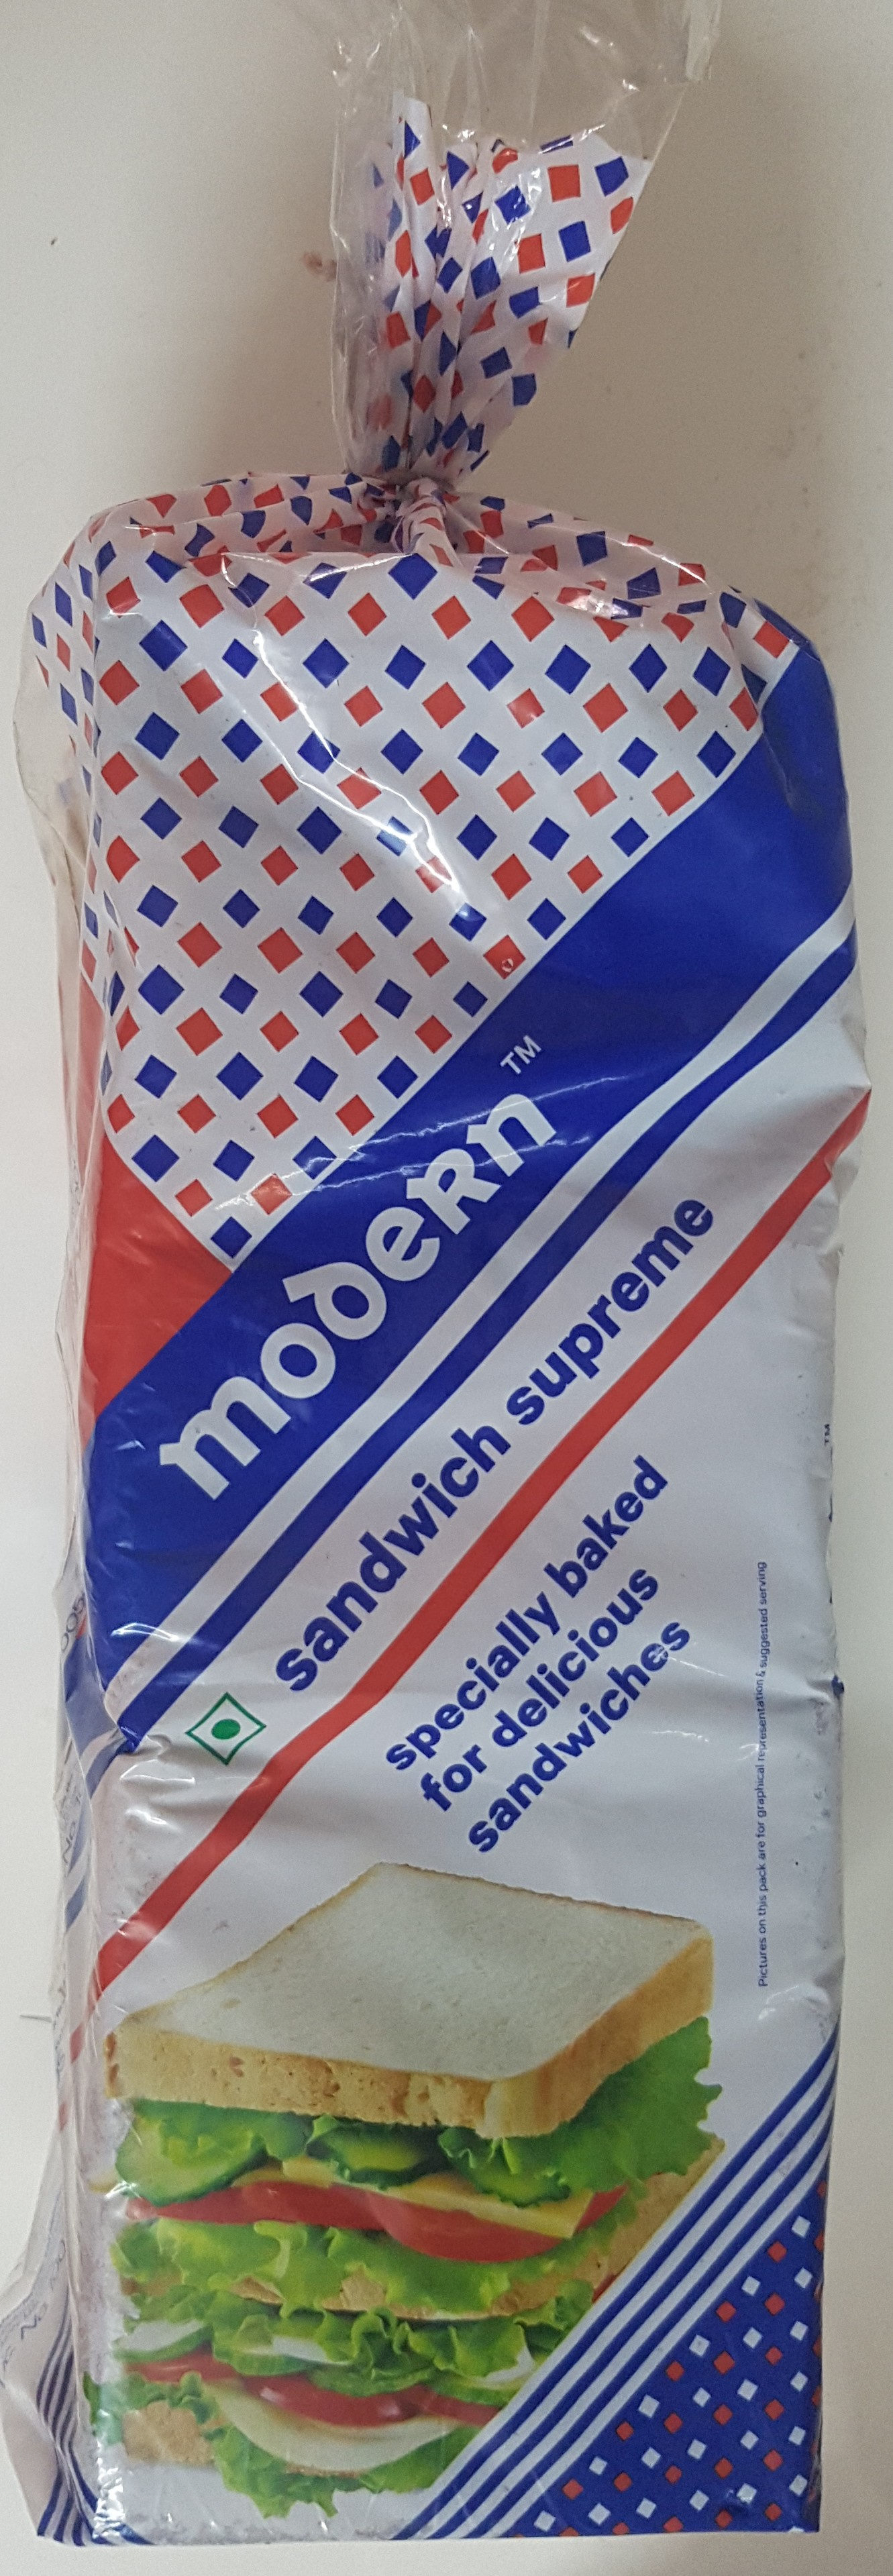 Modern Sandwich Supreme - Product